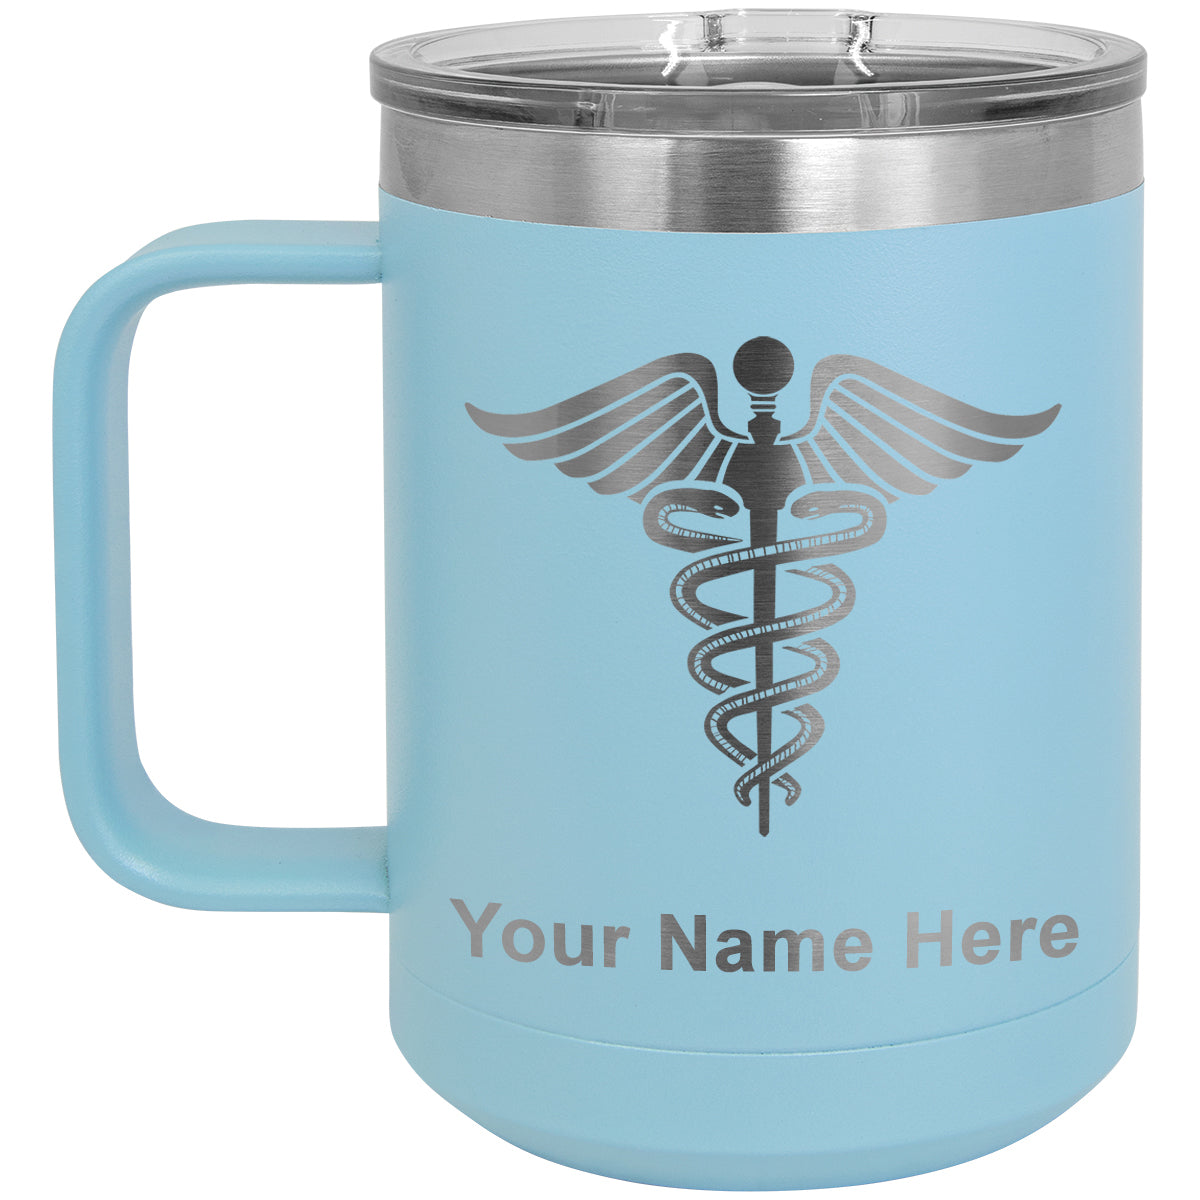 15oz Vacuum Insulated Coffee Mug, Caduceus Medical Symbol, Personalized Engraving Included